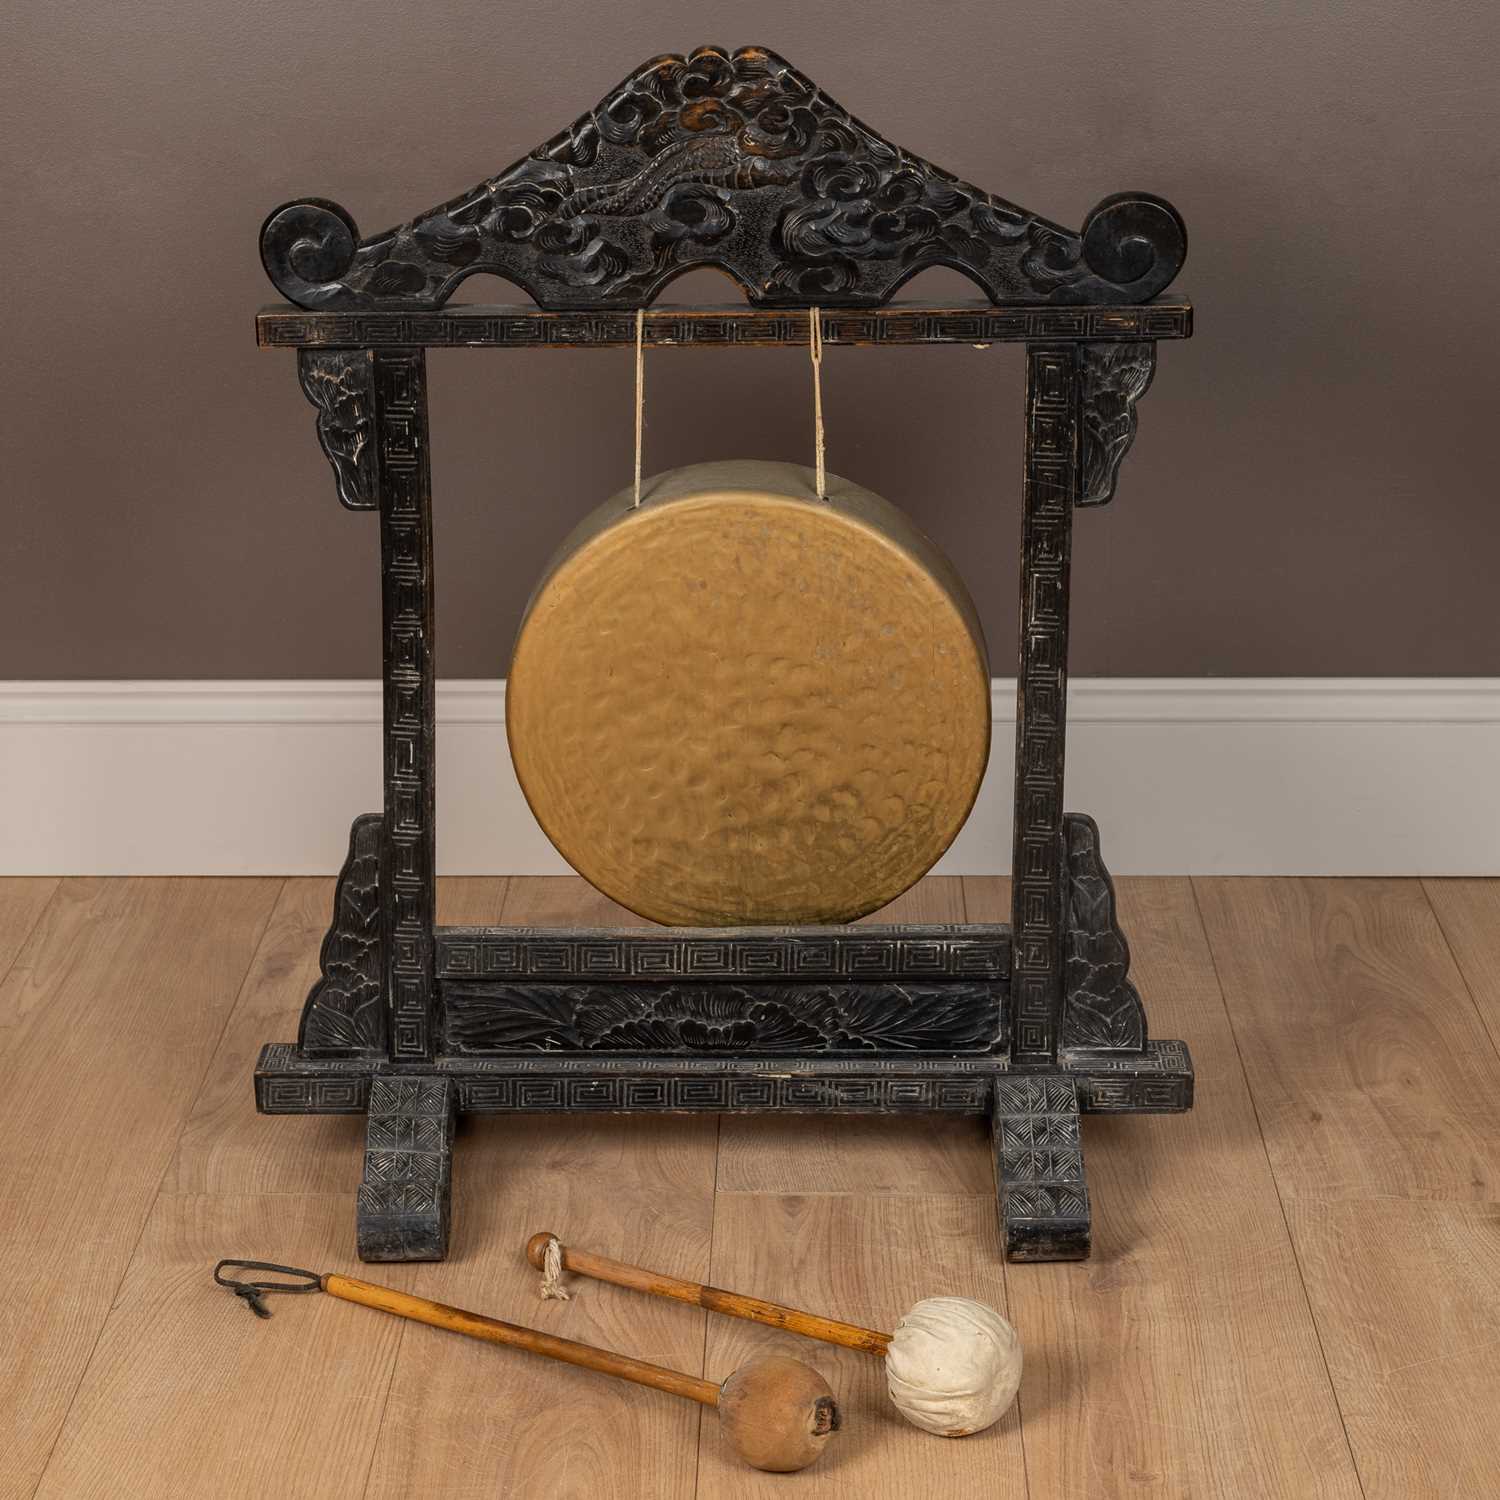 Lot 16 - An antique hardwood framed dinner gong